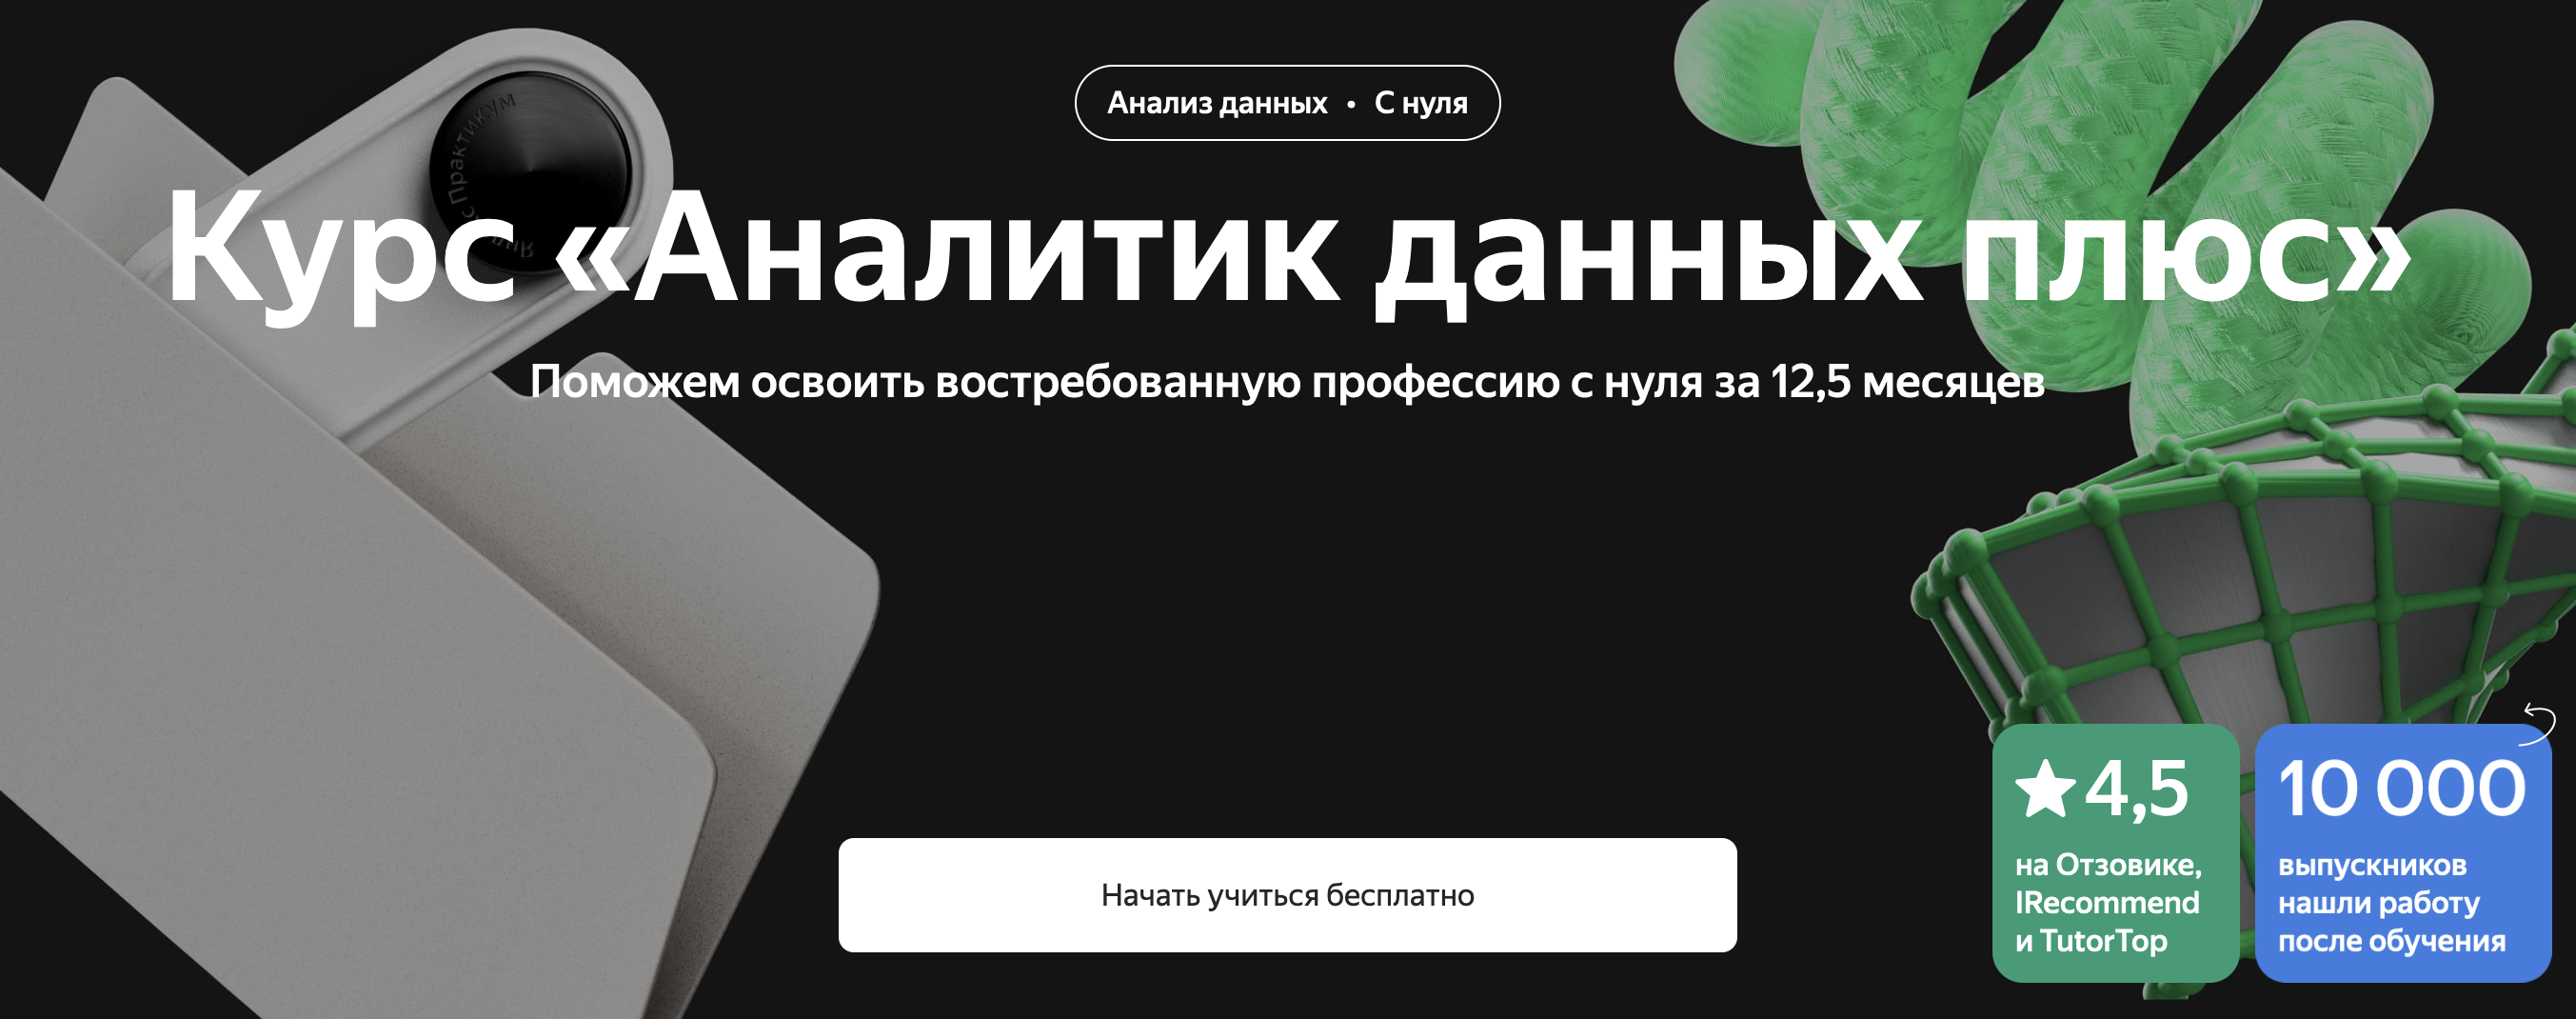 Яндекс Практикум: Аналитик данных плюс